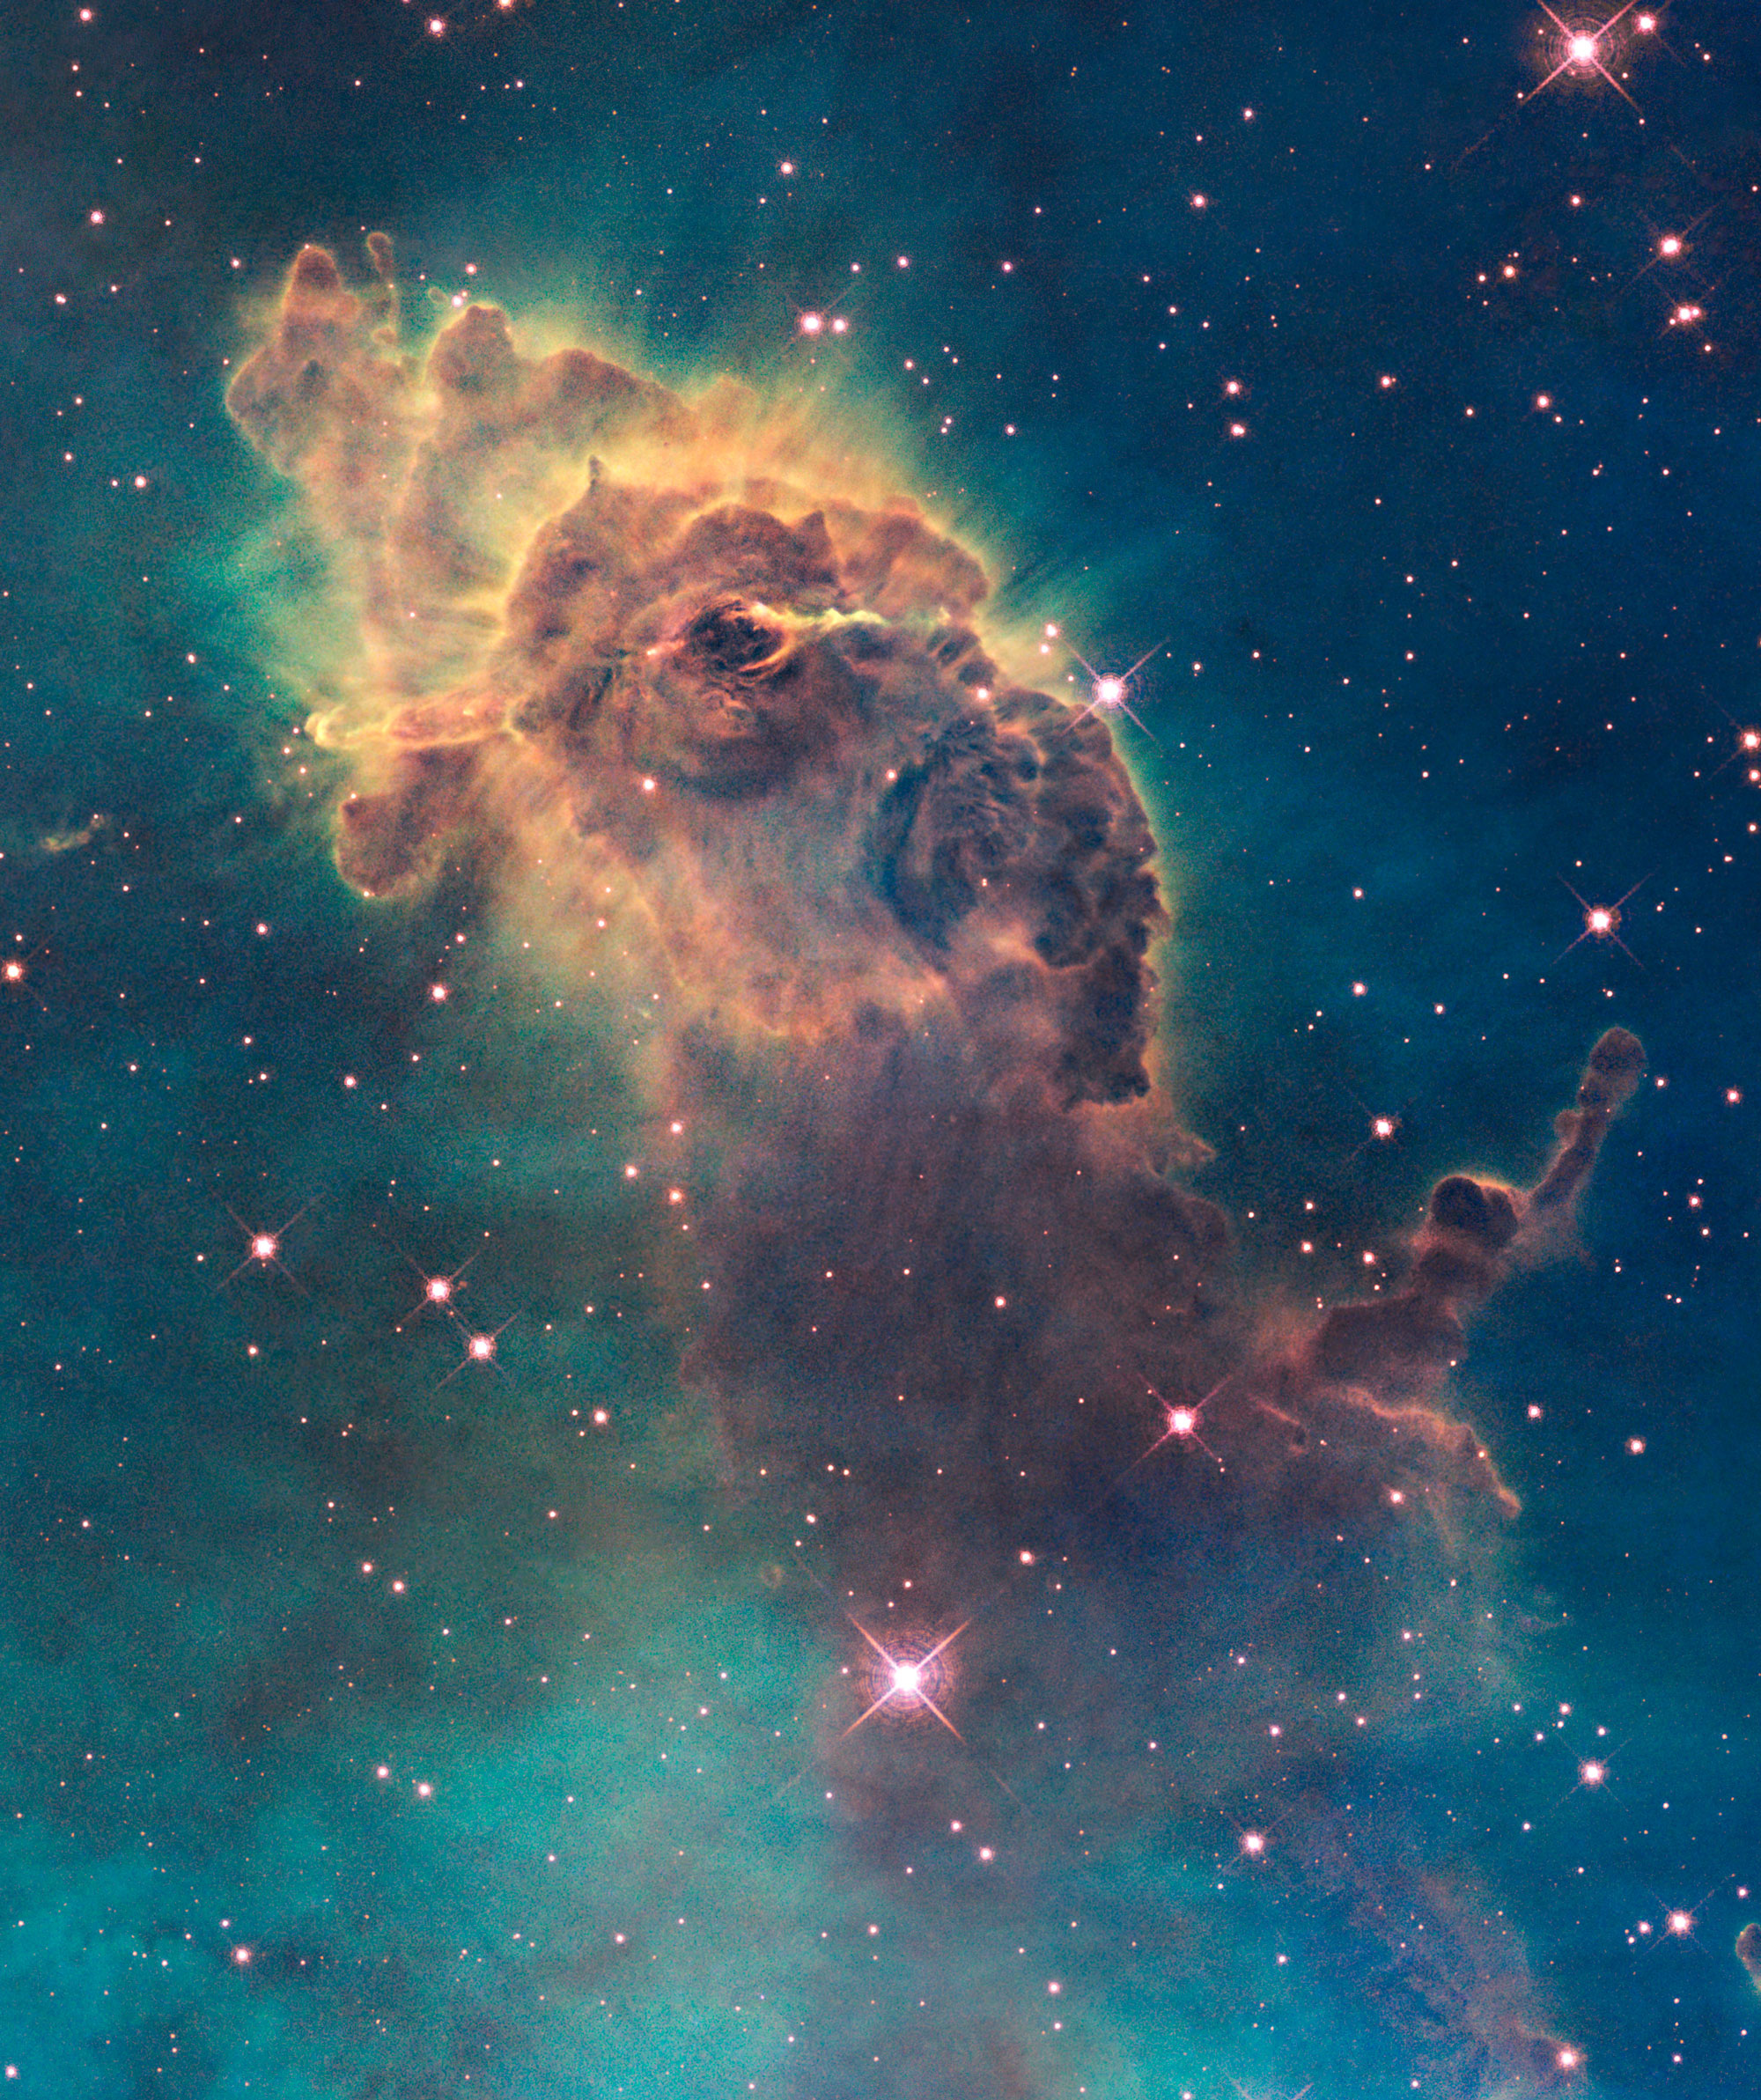 Nebula image from hubble and nasa